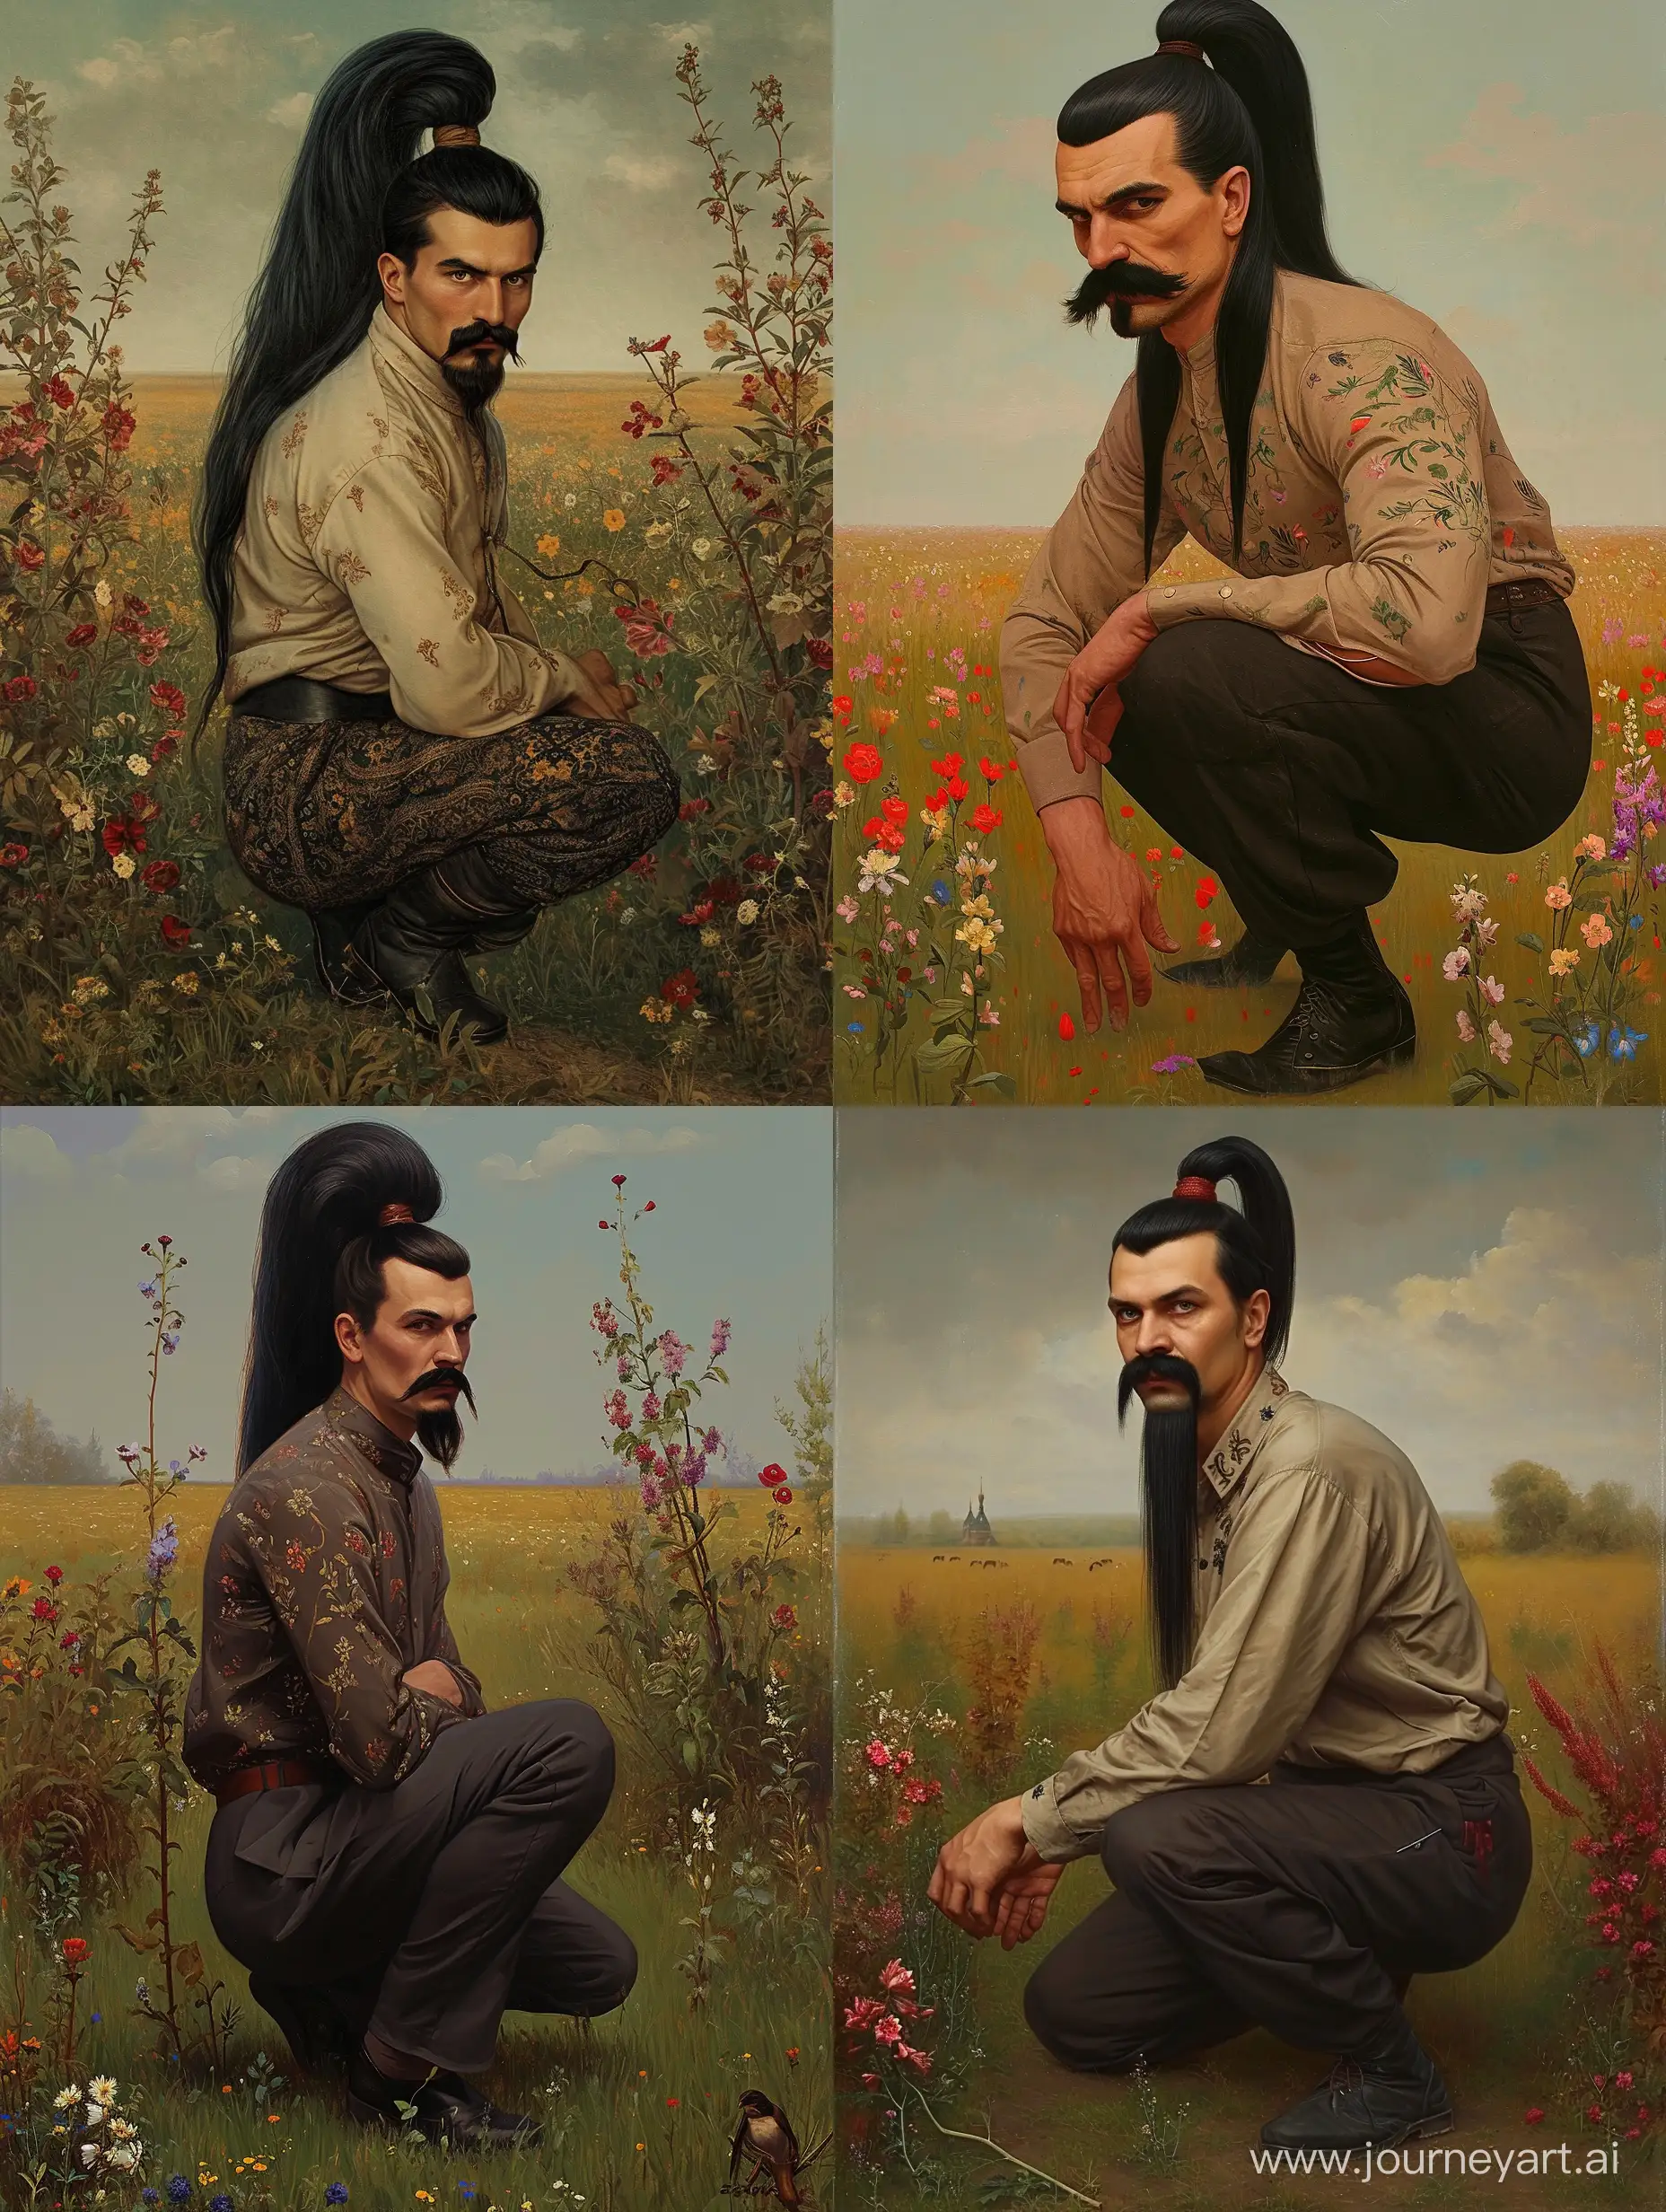 Russian-Folk-Tale-Character-with-Black-Mustache-in-Vibrant-Attire